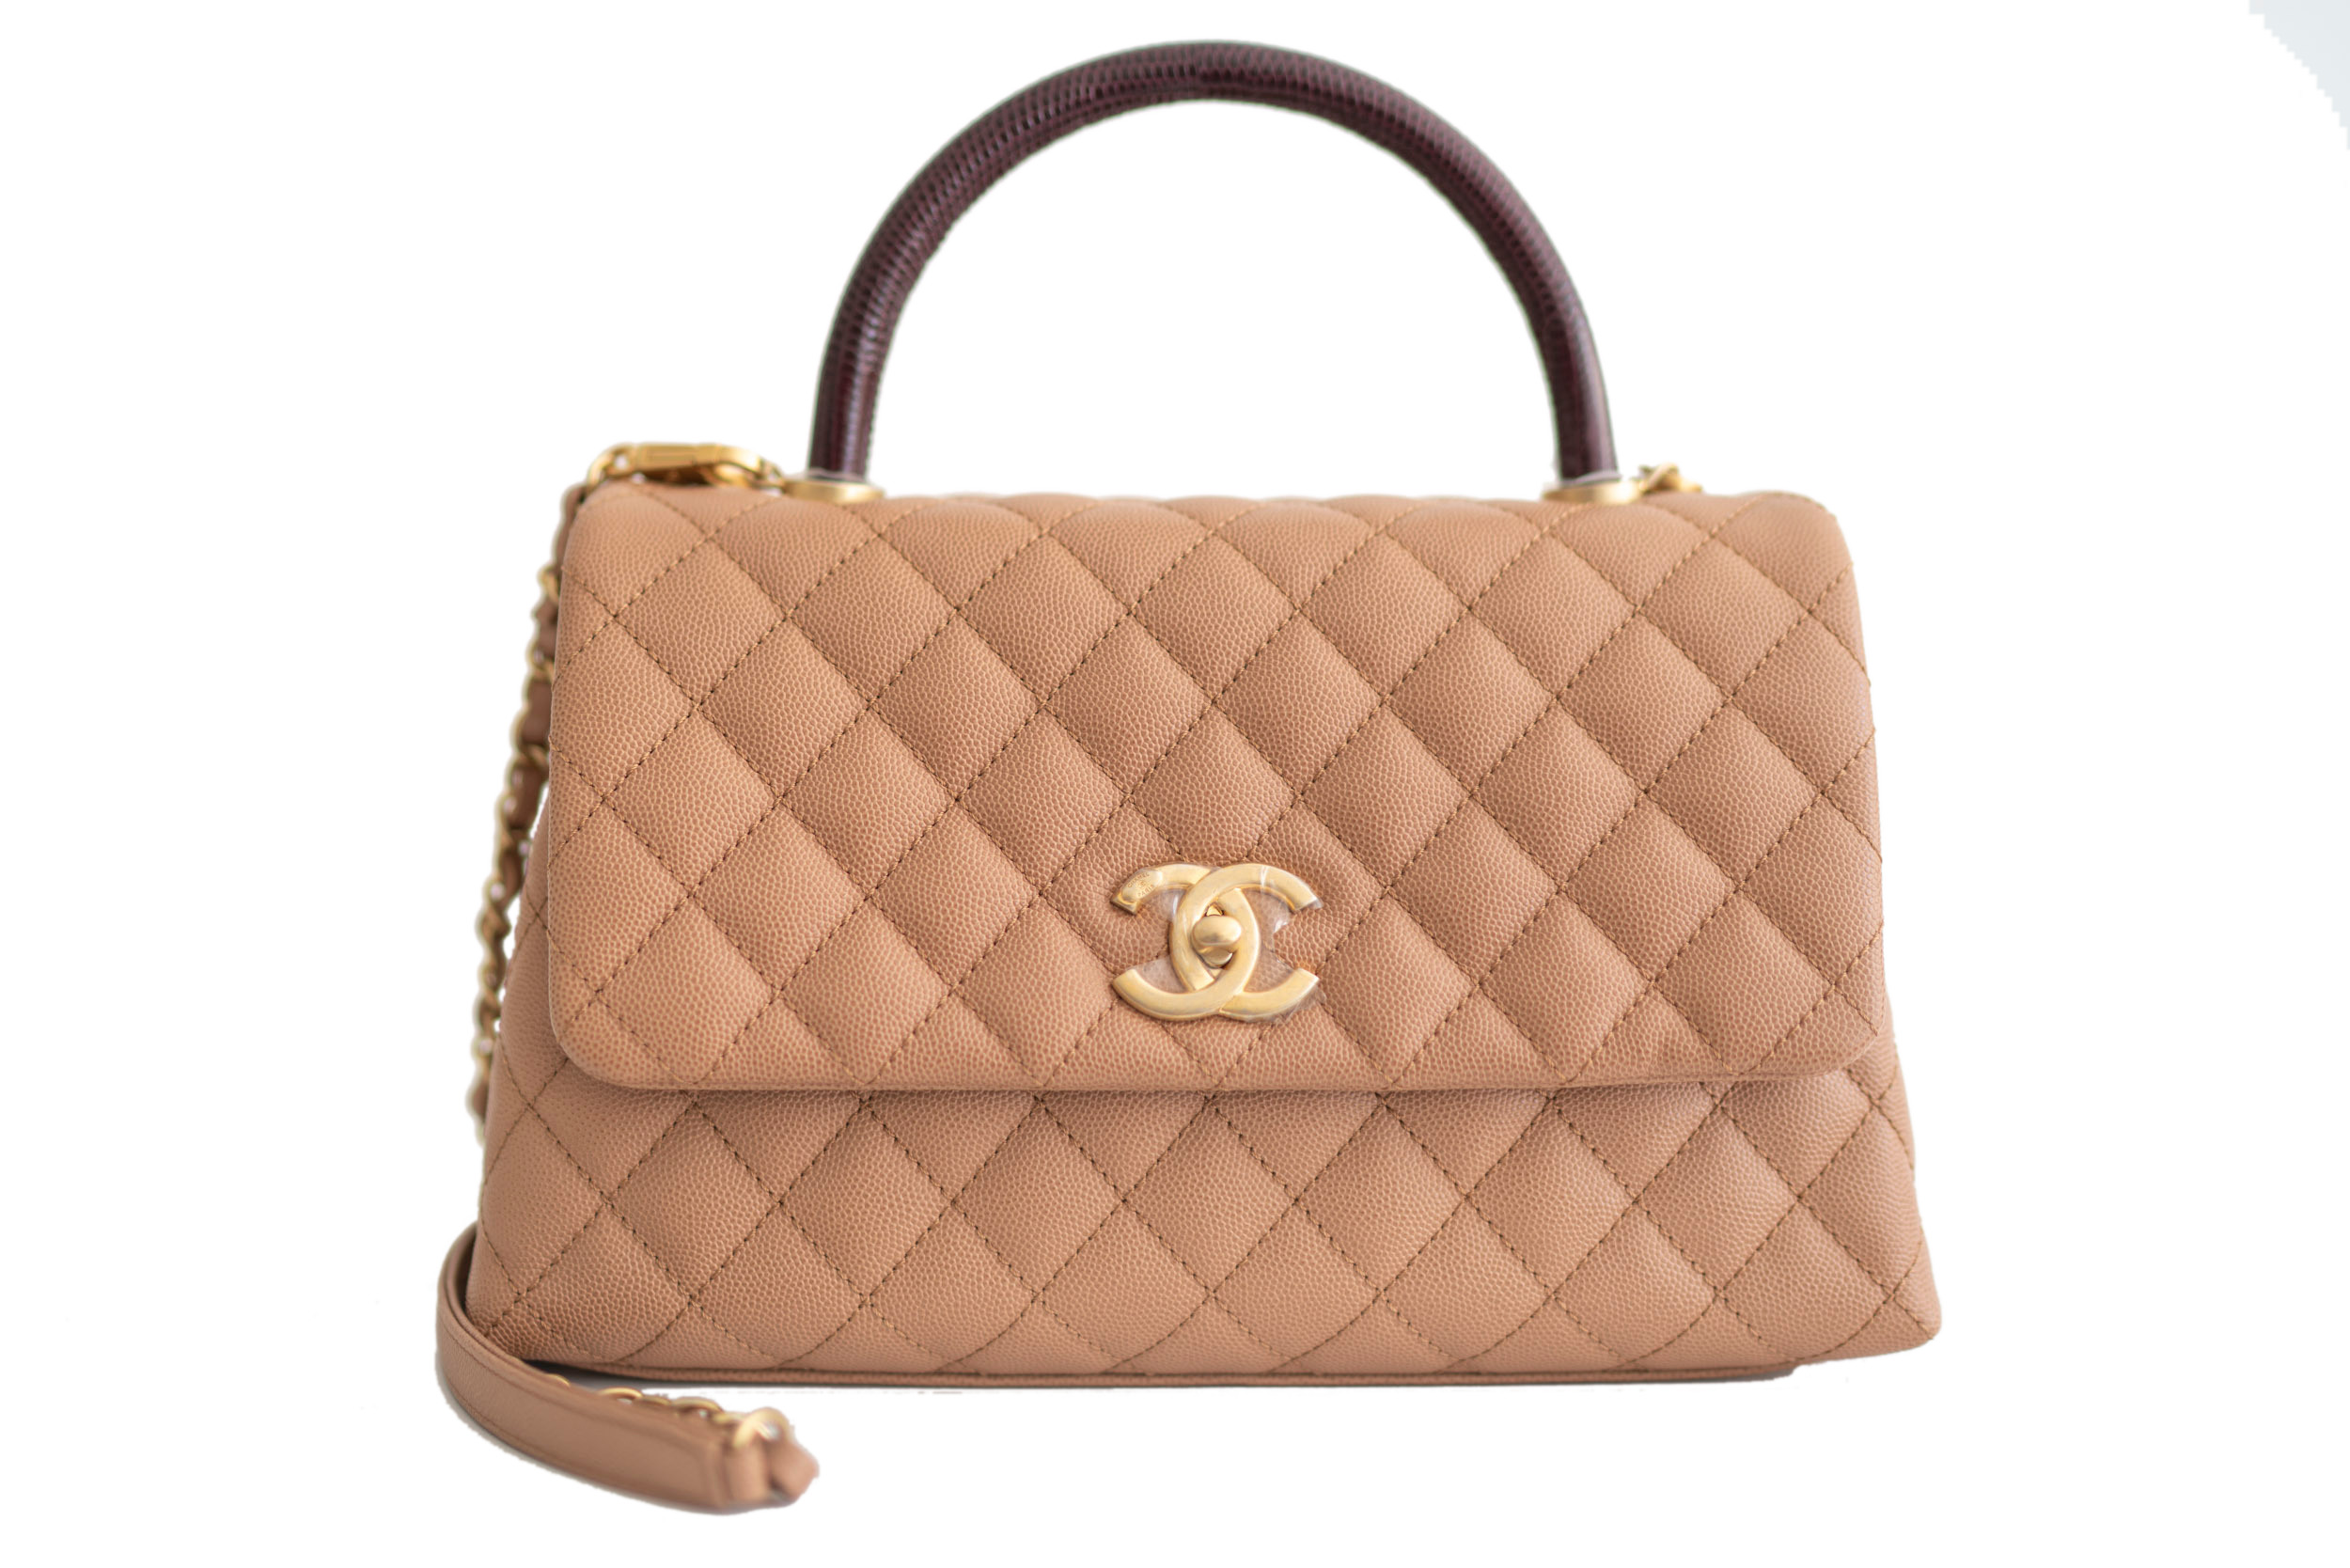 Coco Handle Chanel Price Sale 52 Off Knaapen Nl